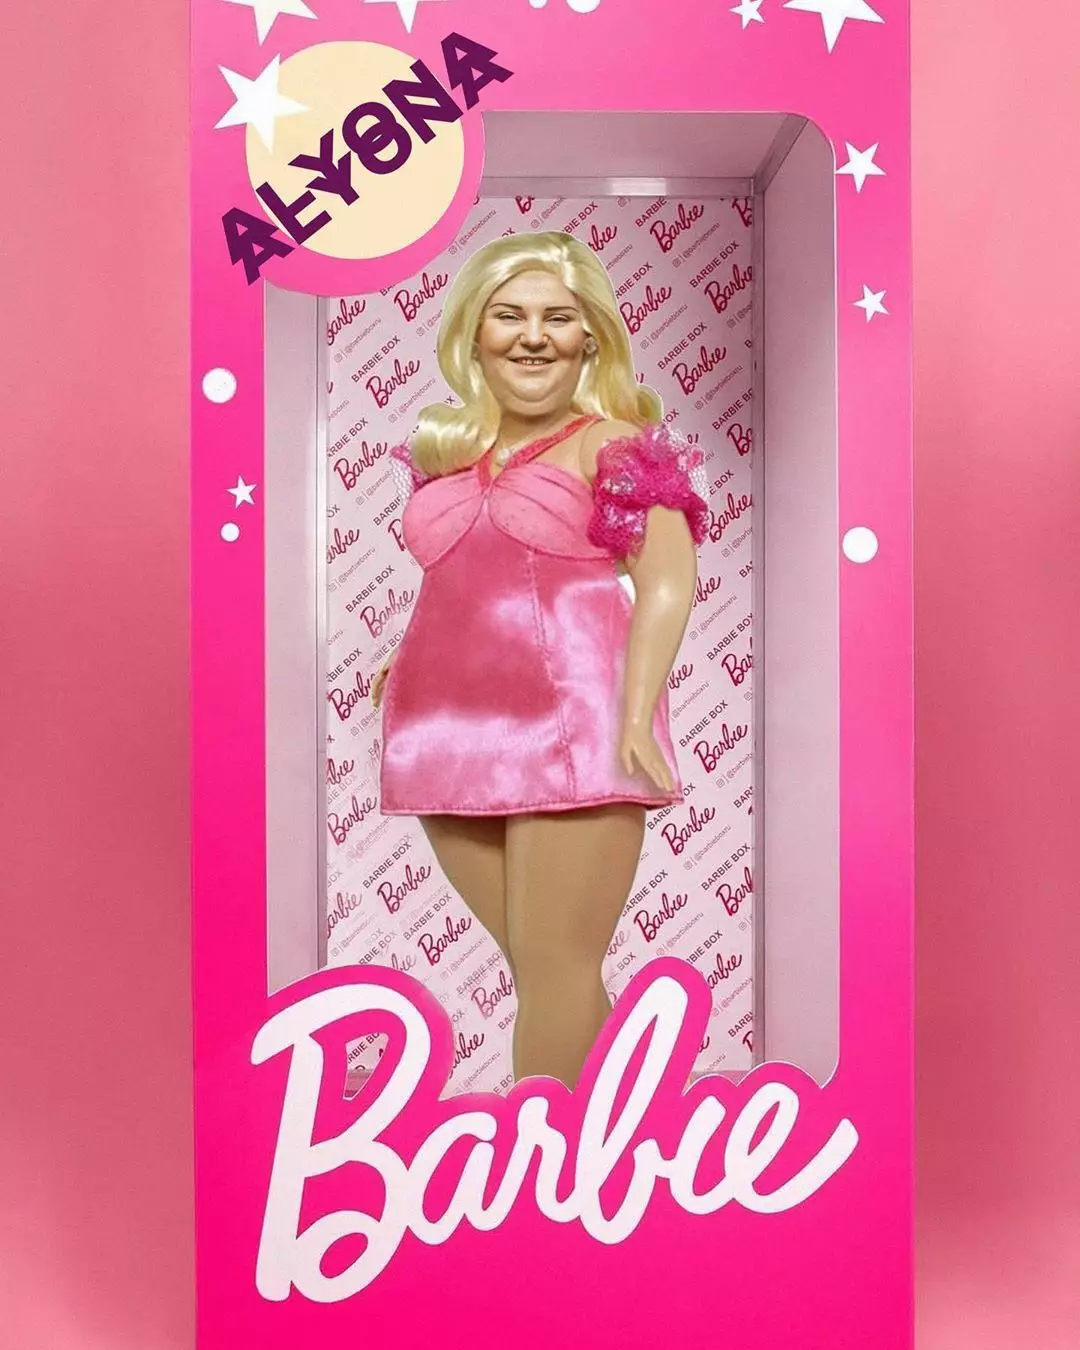 alyona alyona превратилась в Барби